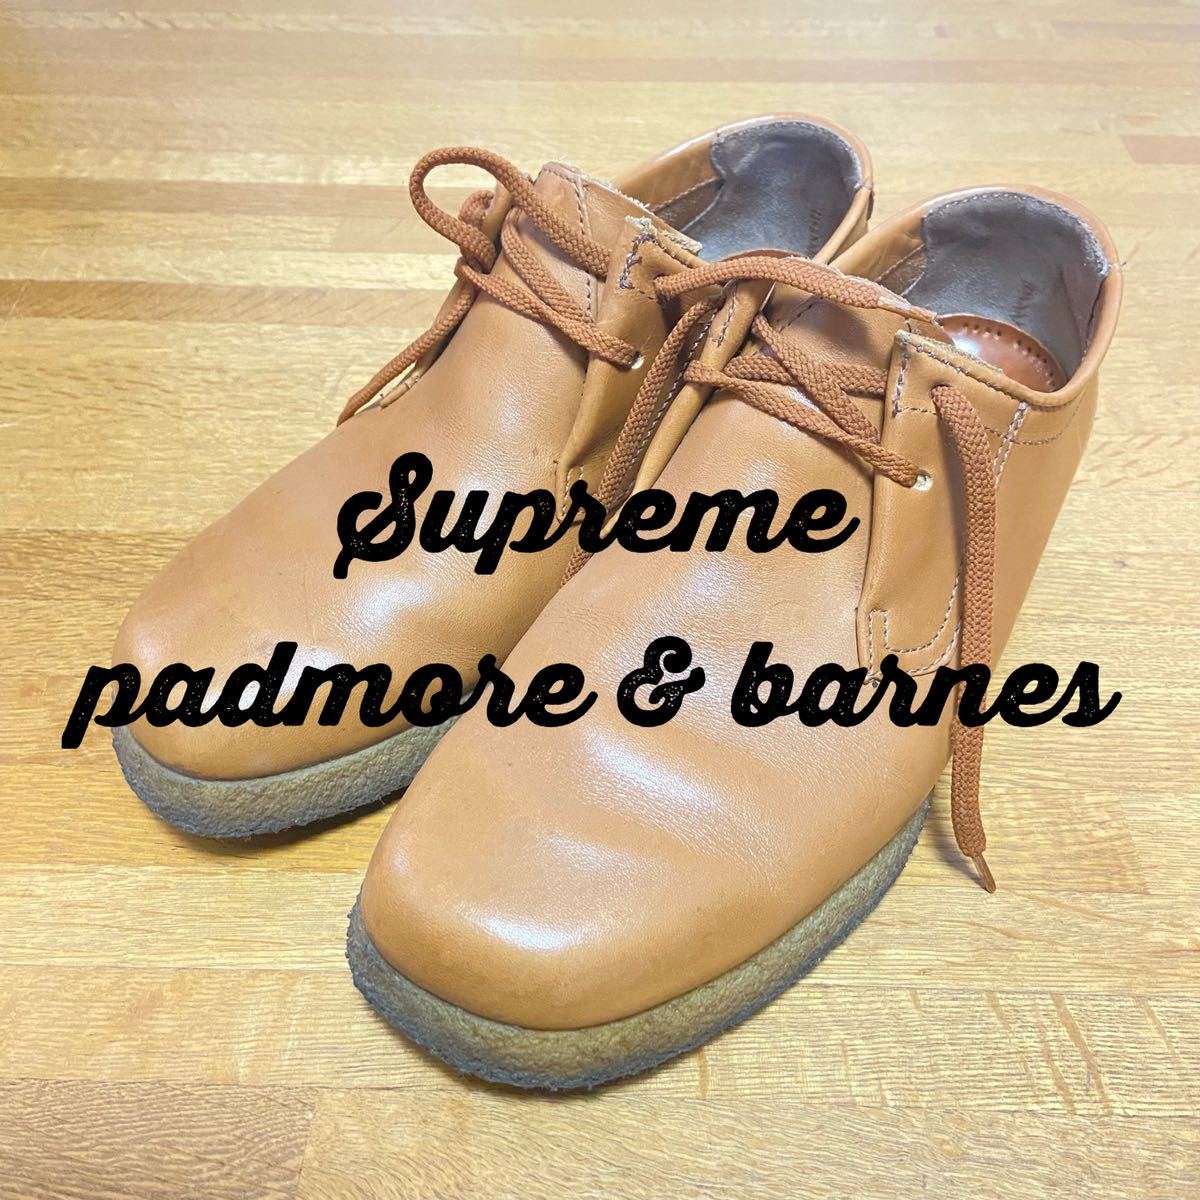 supreme padmore&barnes P500 NB pangeaconnect.io